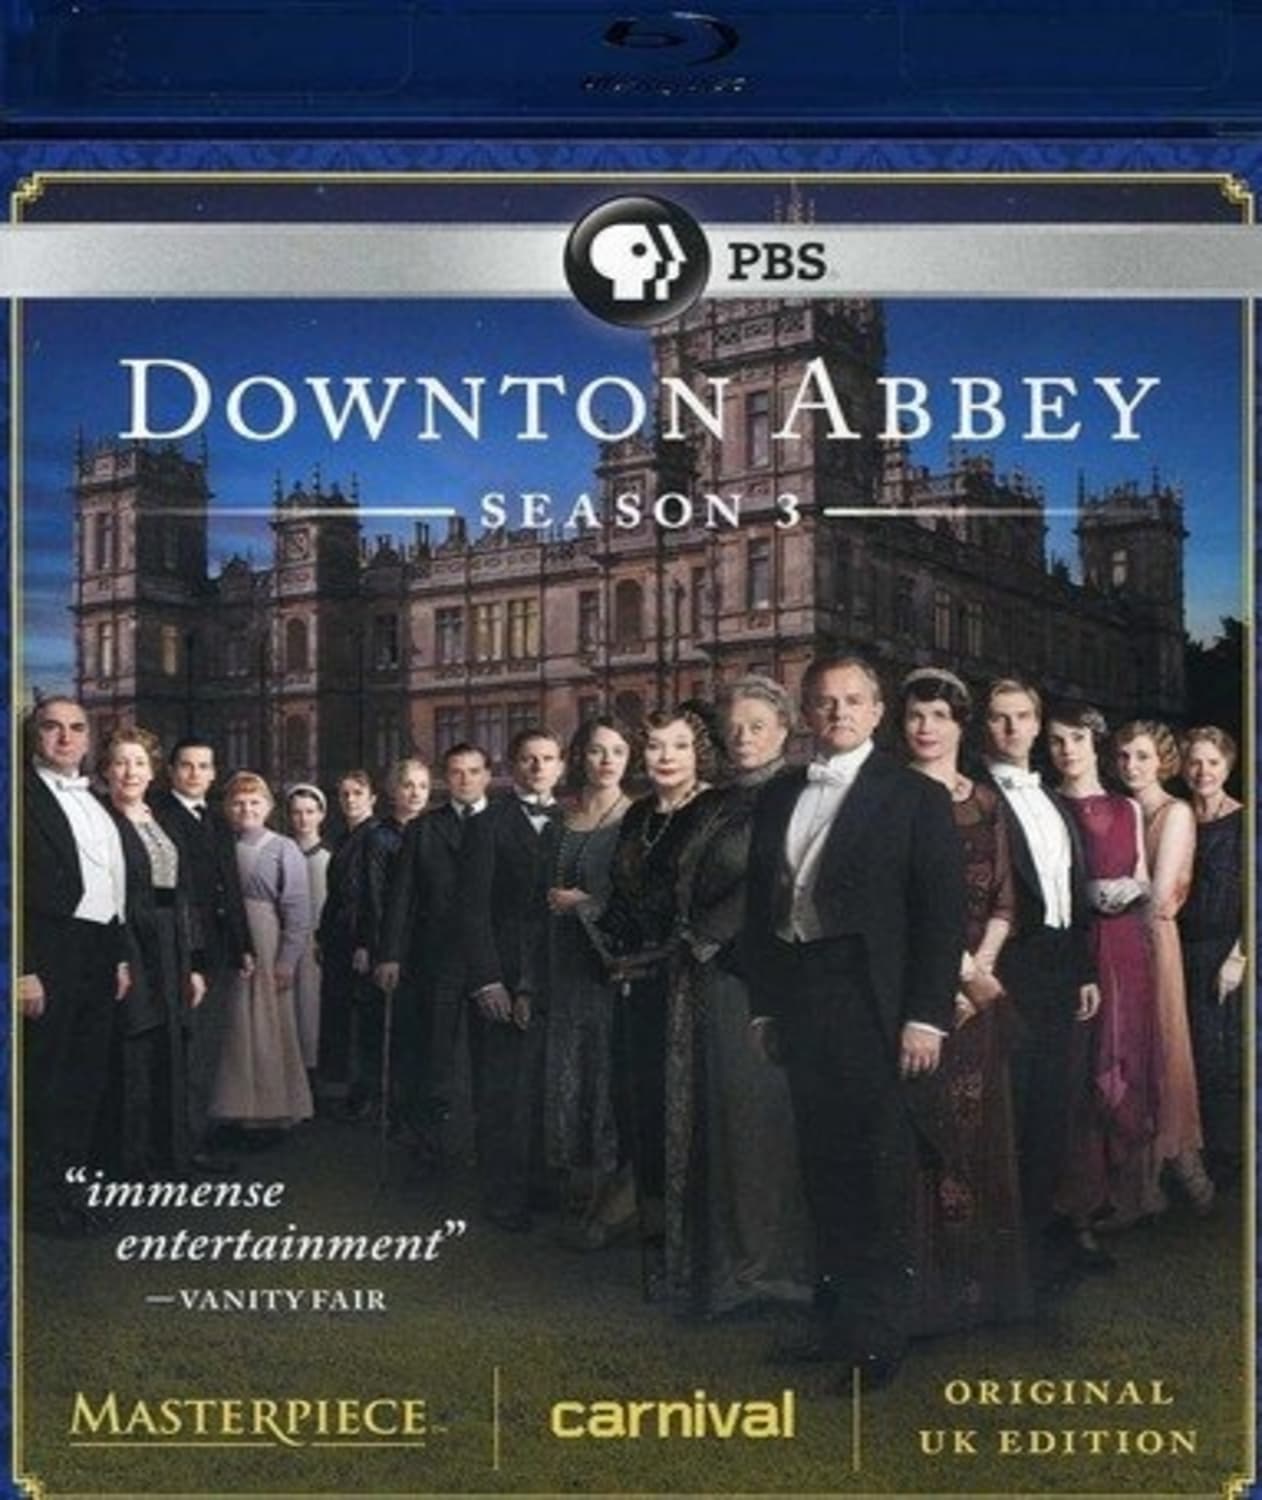 Downton Abbey Season 3 (U.K. Edition) (Blu-ray) on MovieShack